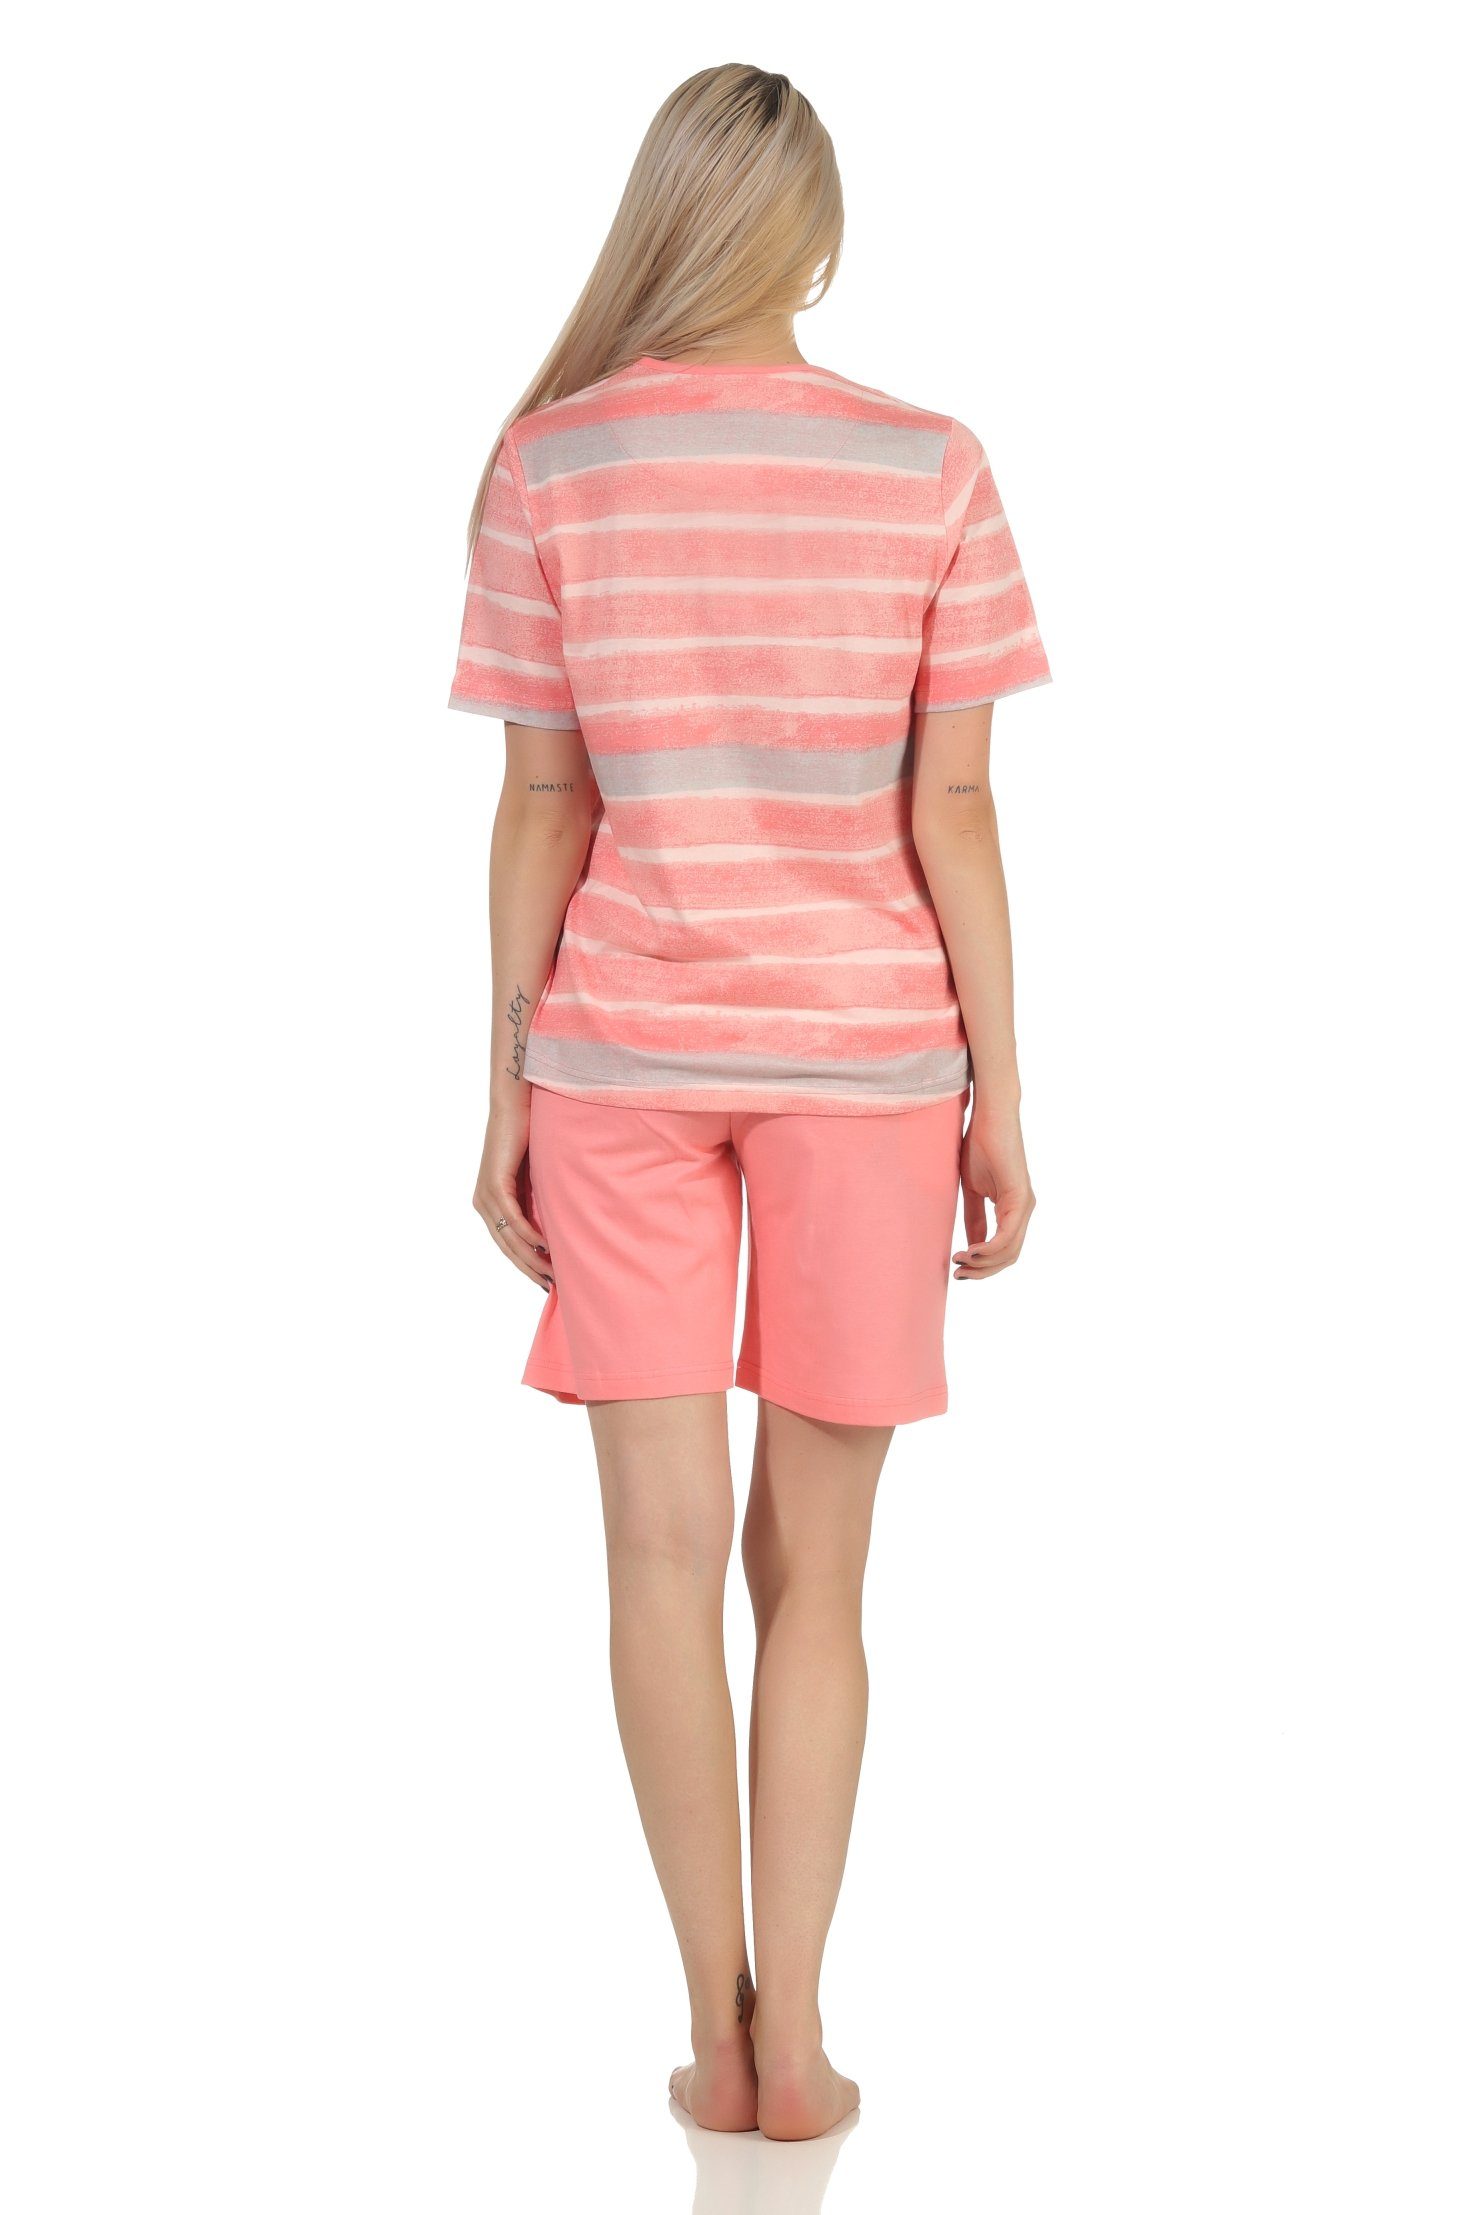 Look Streifen rosa farbenfrohen kurzarm Pyjama Normann ShortyPyjama Damen Schlafanzug im